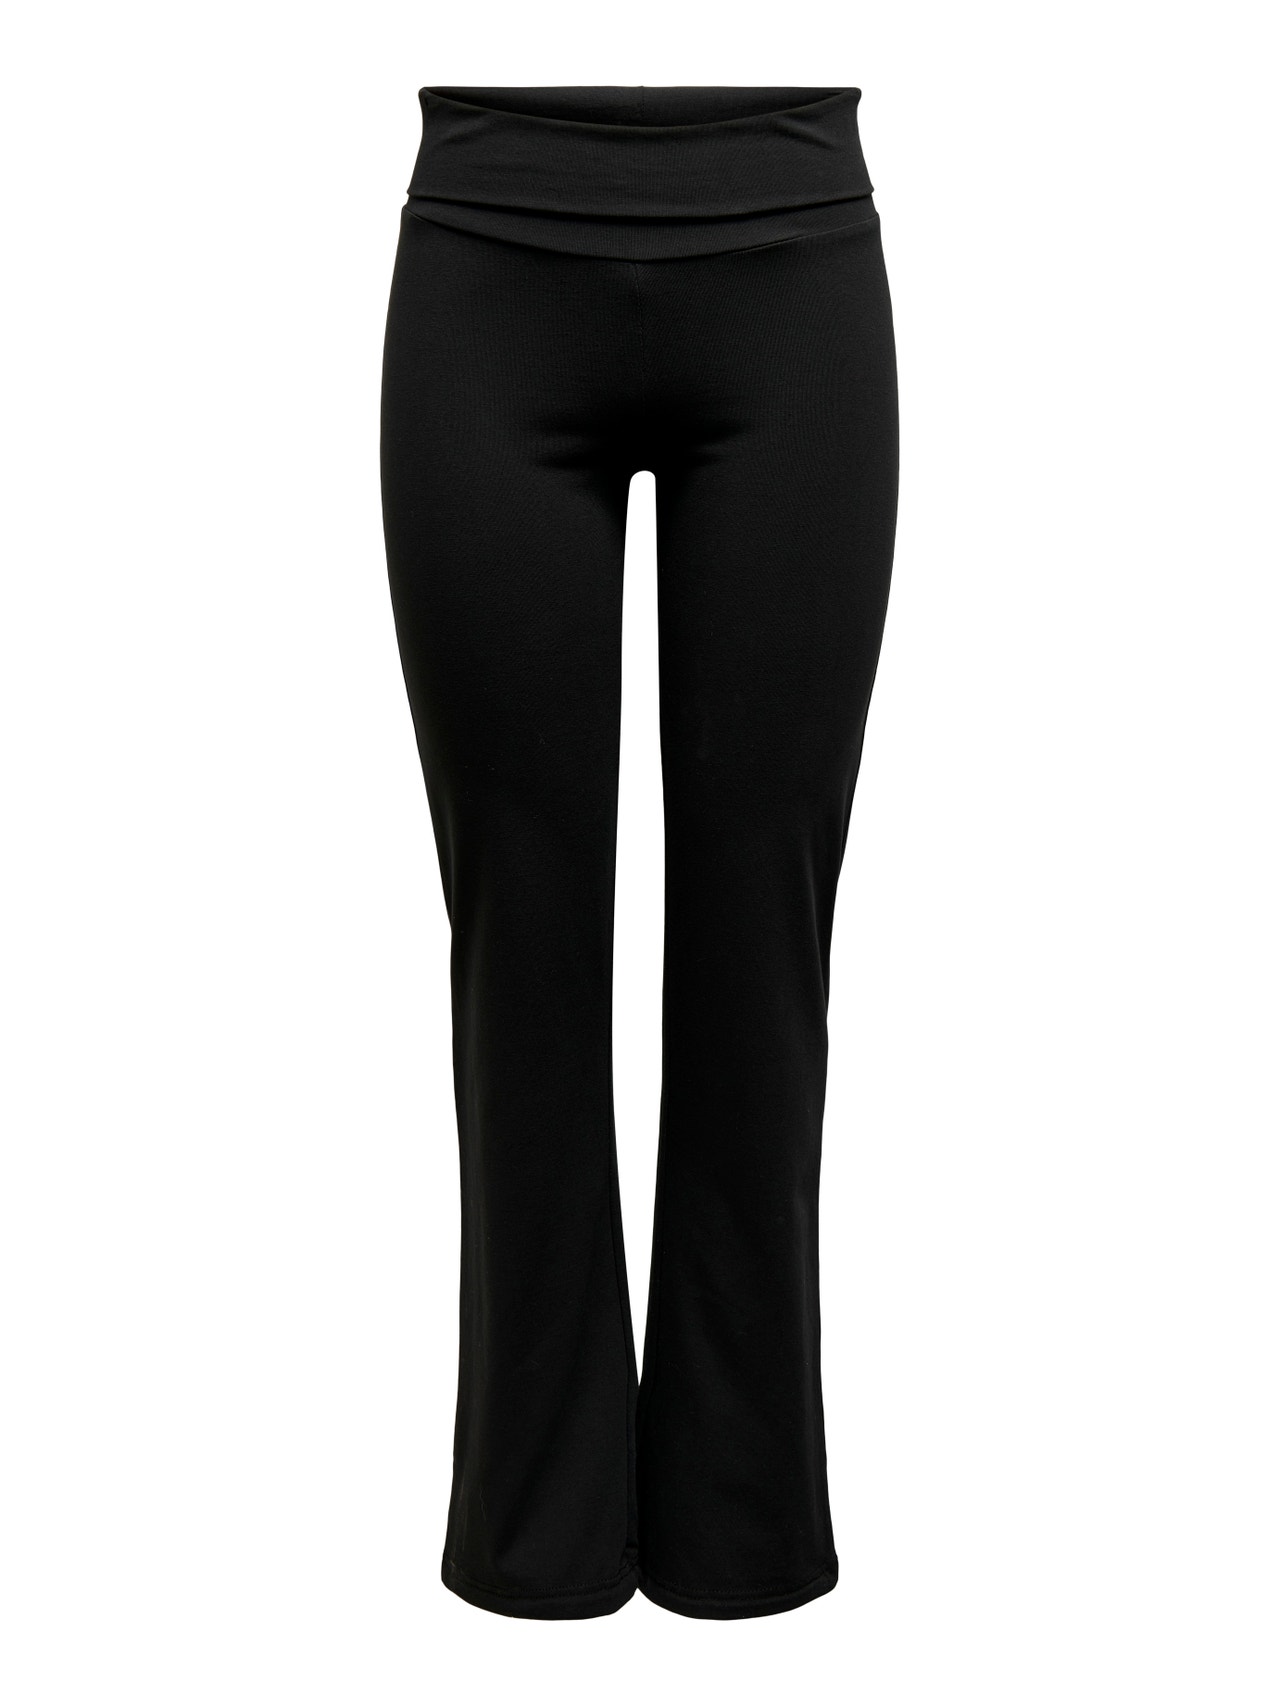 ONLY Pantalons Flared Fit Taille moyenne Jambe évasée Poignets avec bande élastique -Black - 15062199